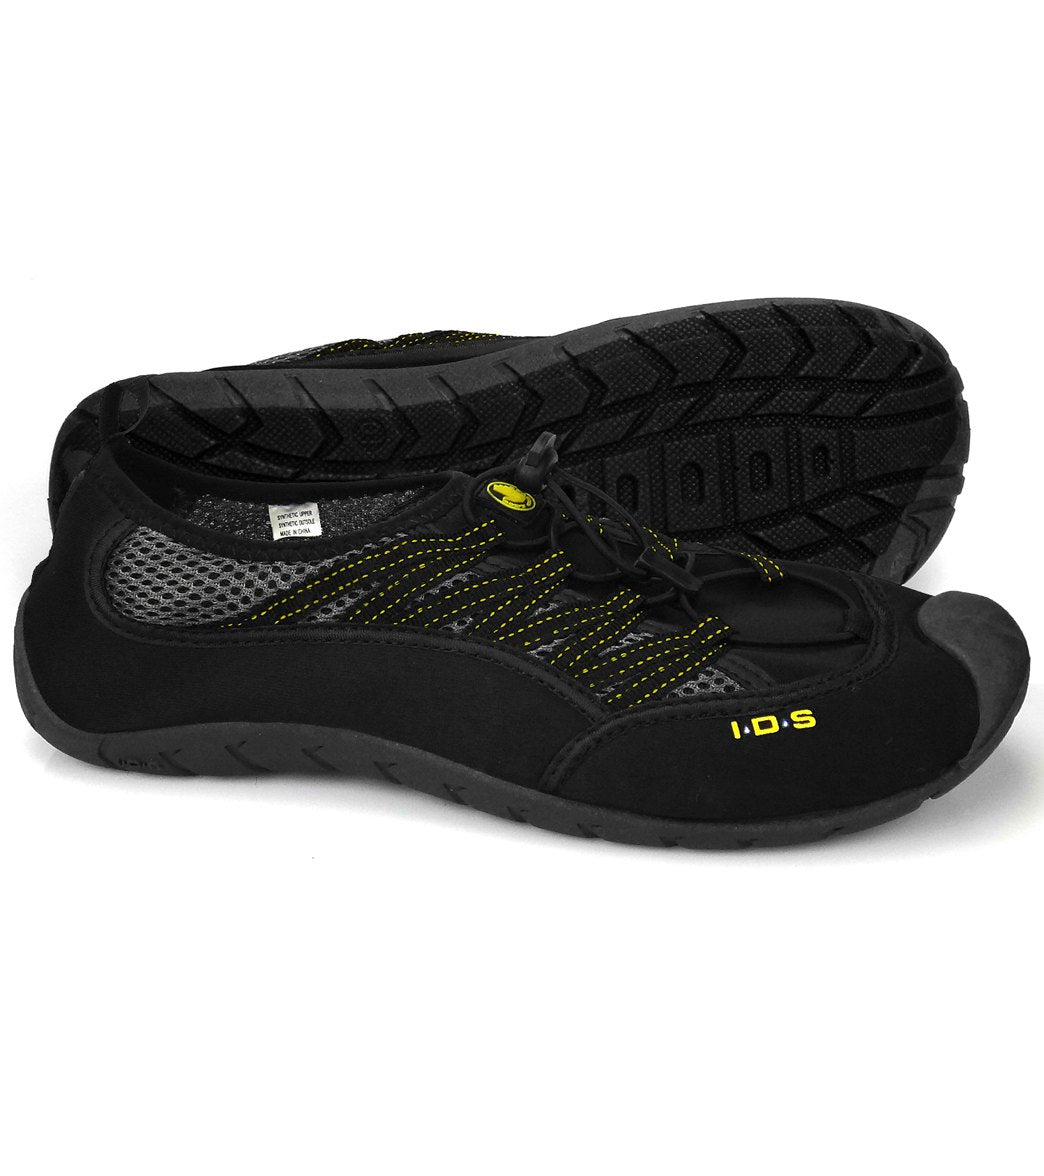 Body Glove Men's Sidewinder Water Shoe - Black/Yellow 13 - Swimoutlet.com